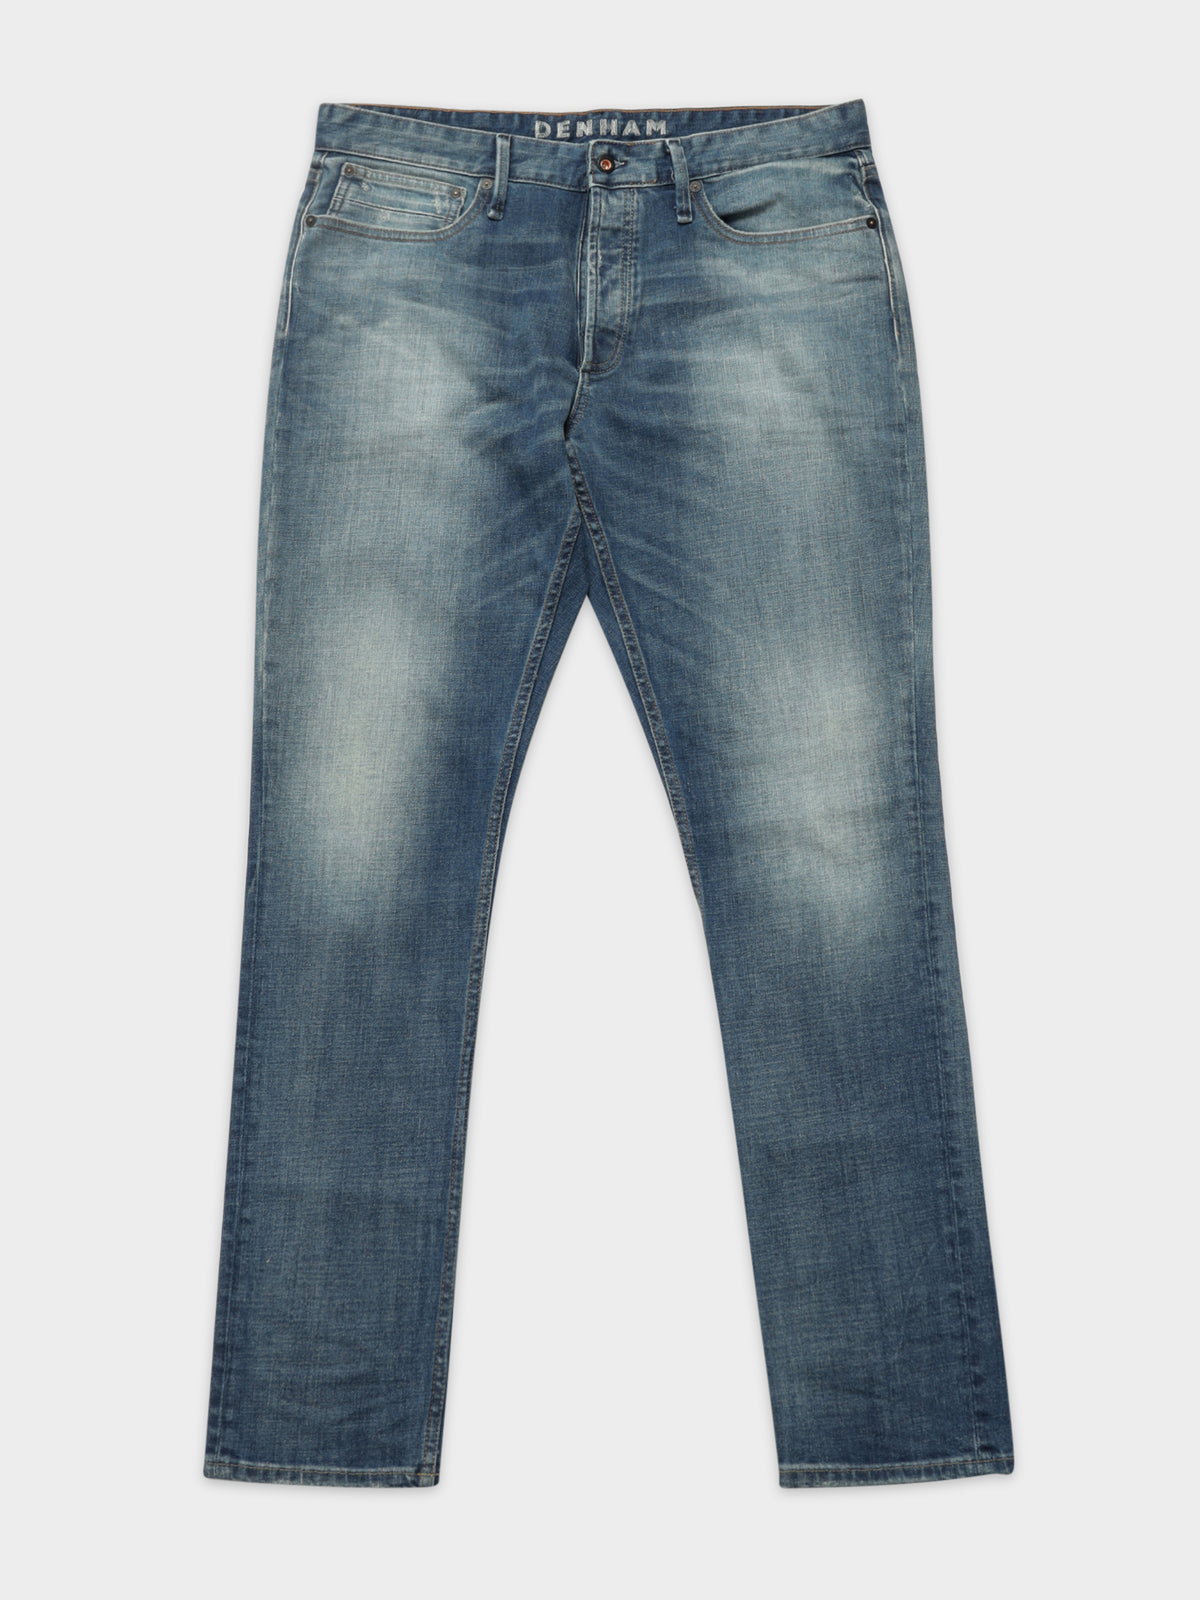 Shank Ava 821 Denim Jeans in Blue